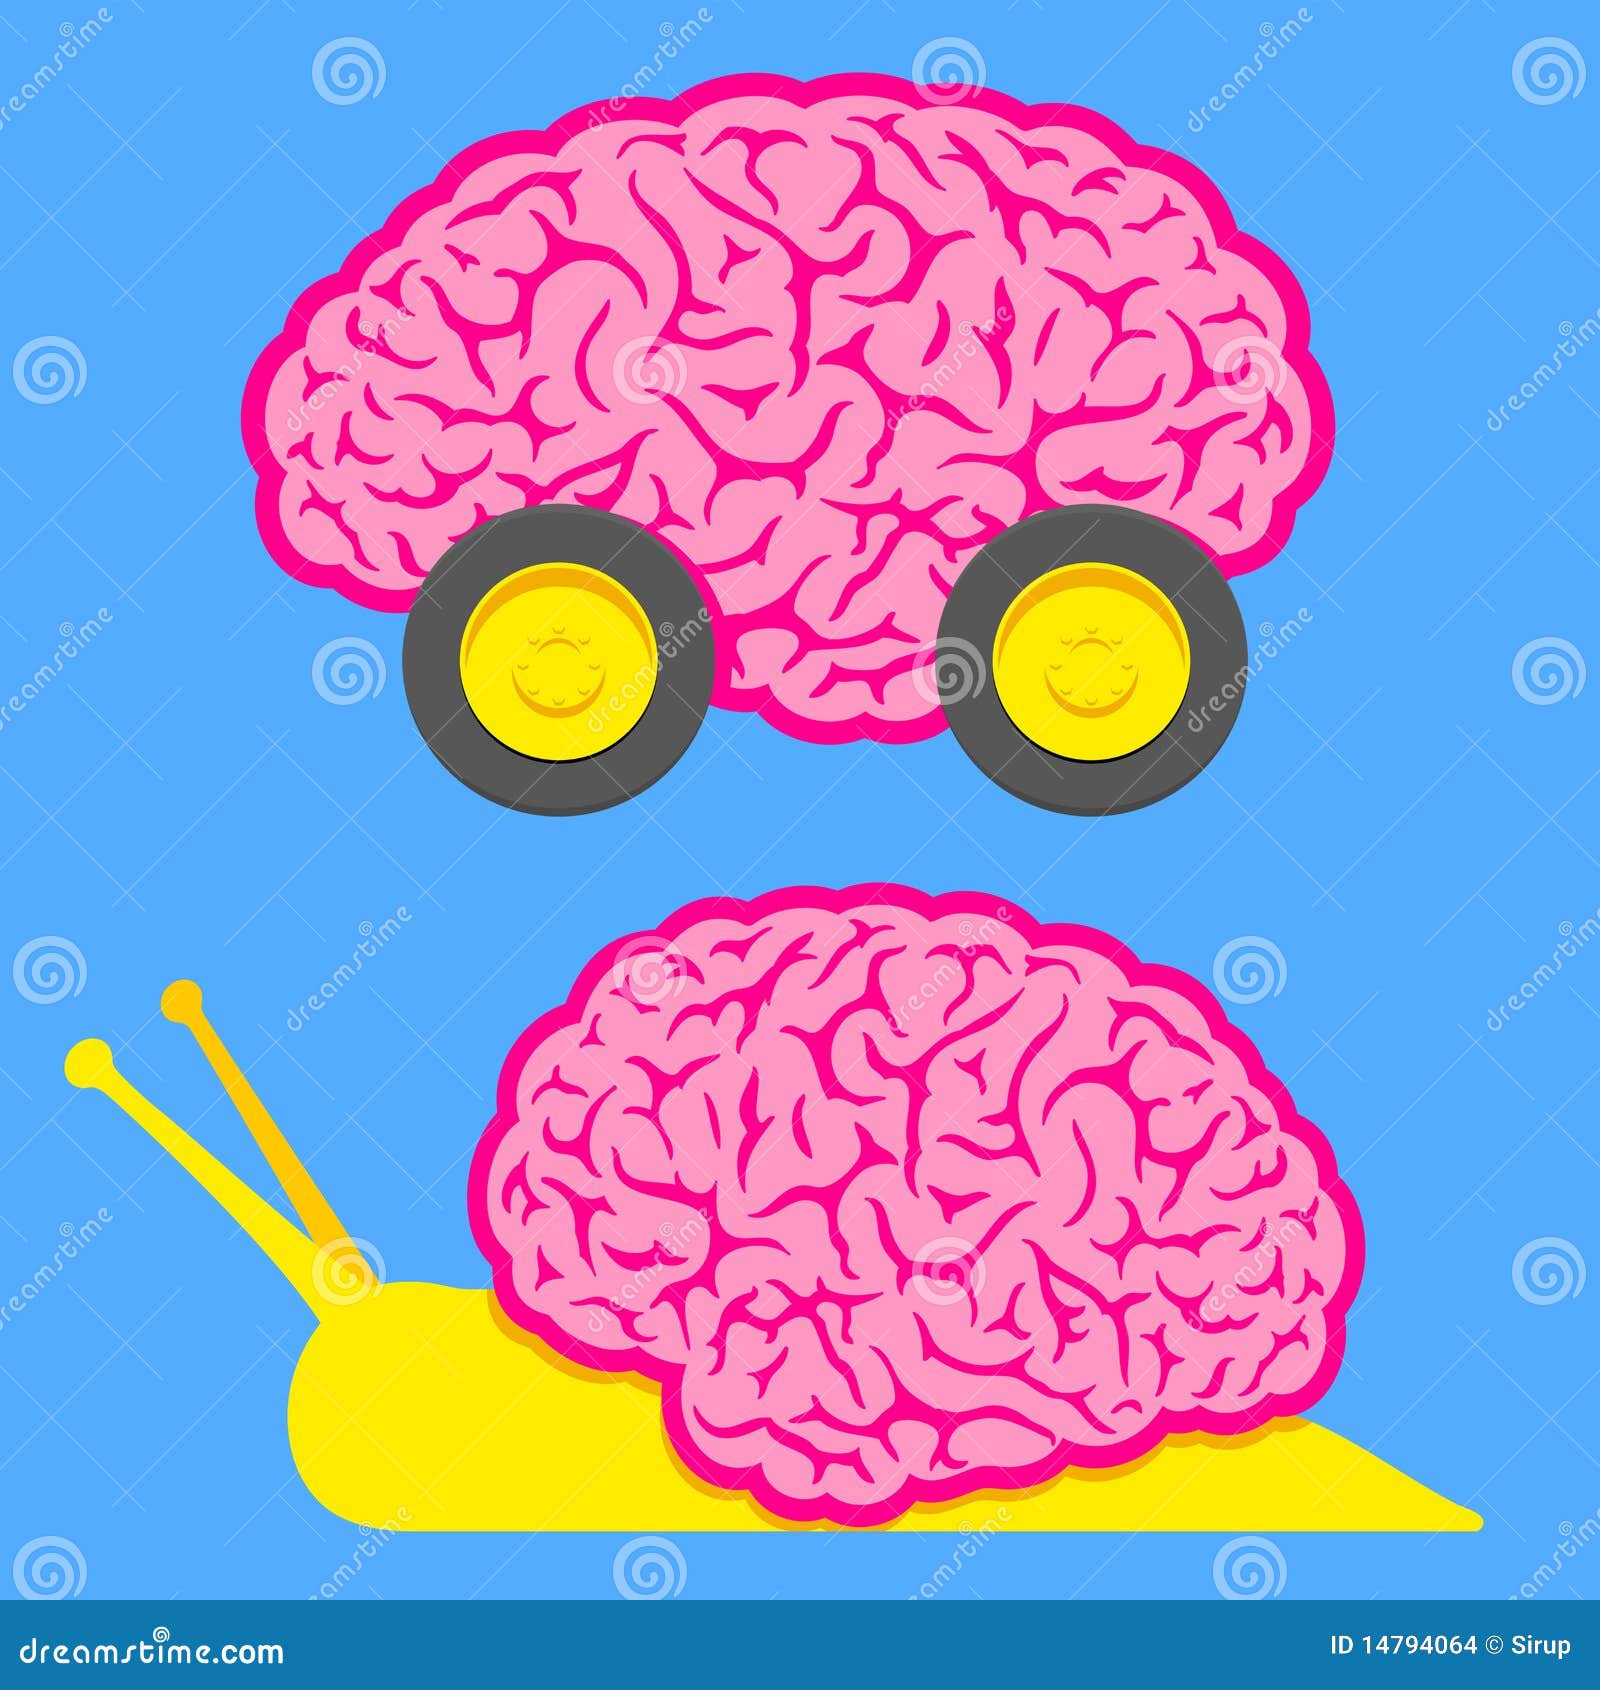 fast brain on wheels and slow snail brain